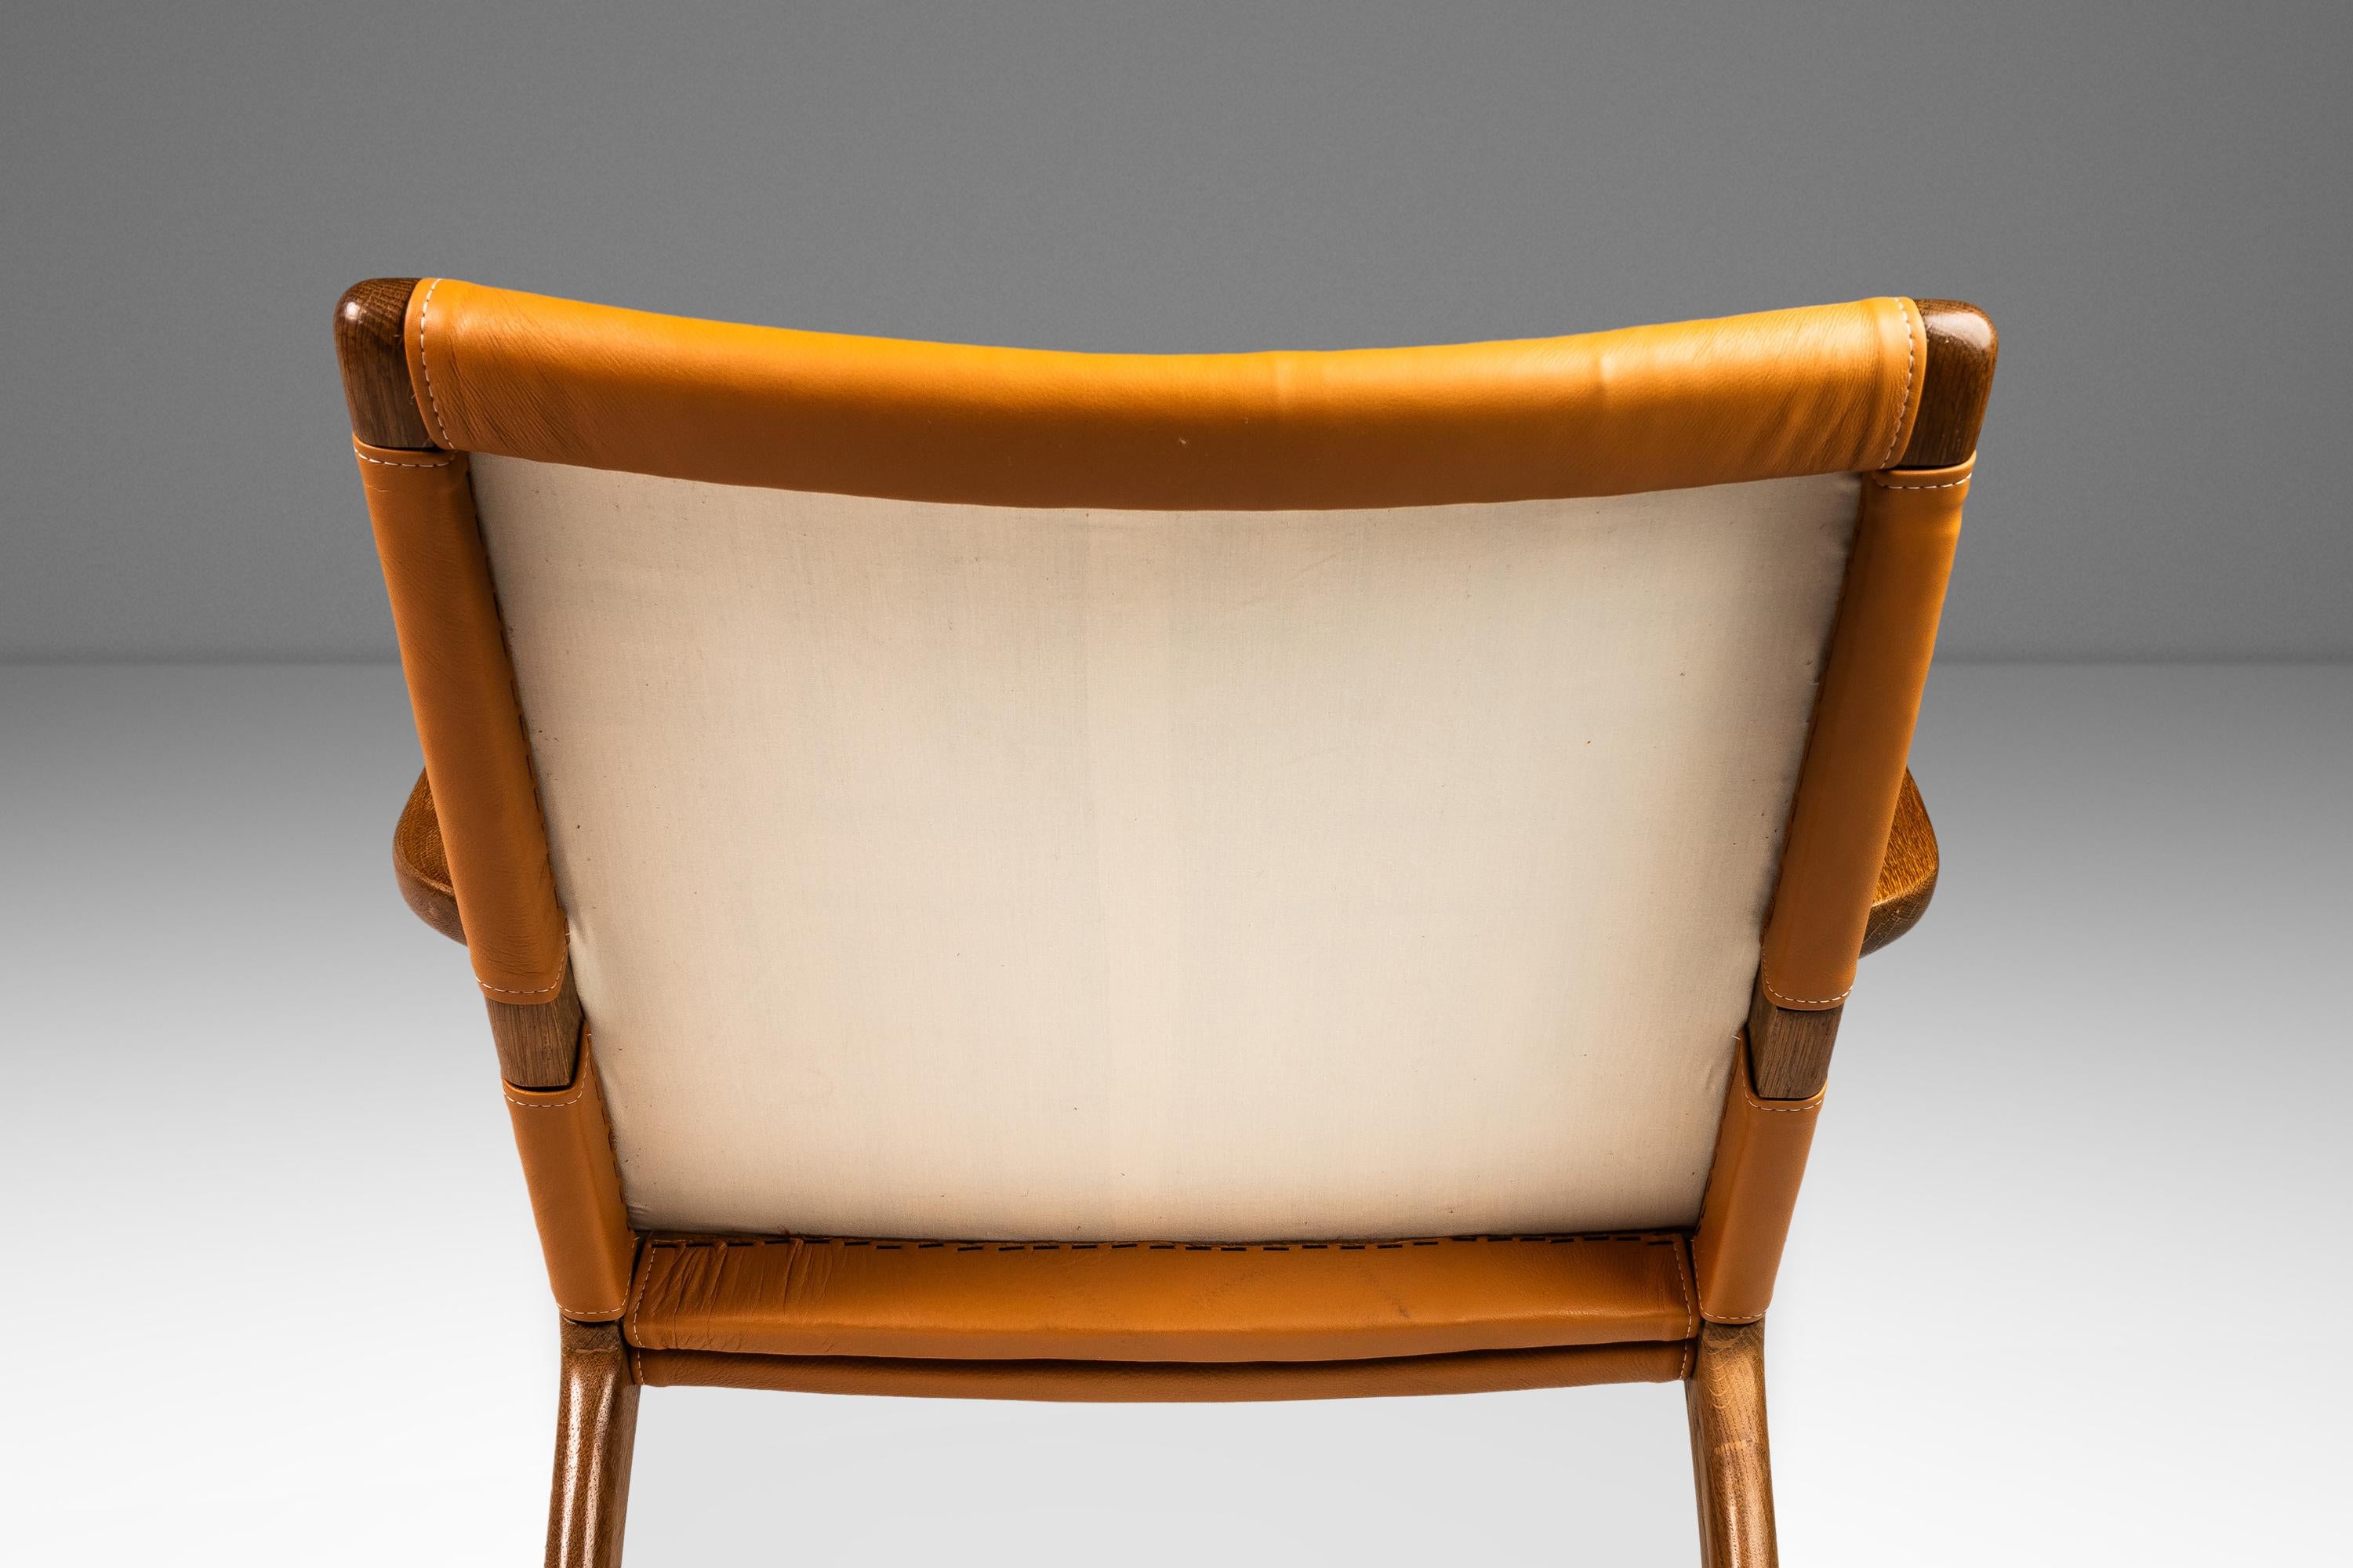  Danish Mid-Century CH 25 Lounge Chair by Hans J. Wegner, Oak & Leather, c. 1950 For Sale 13